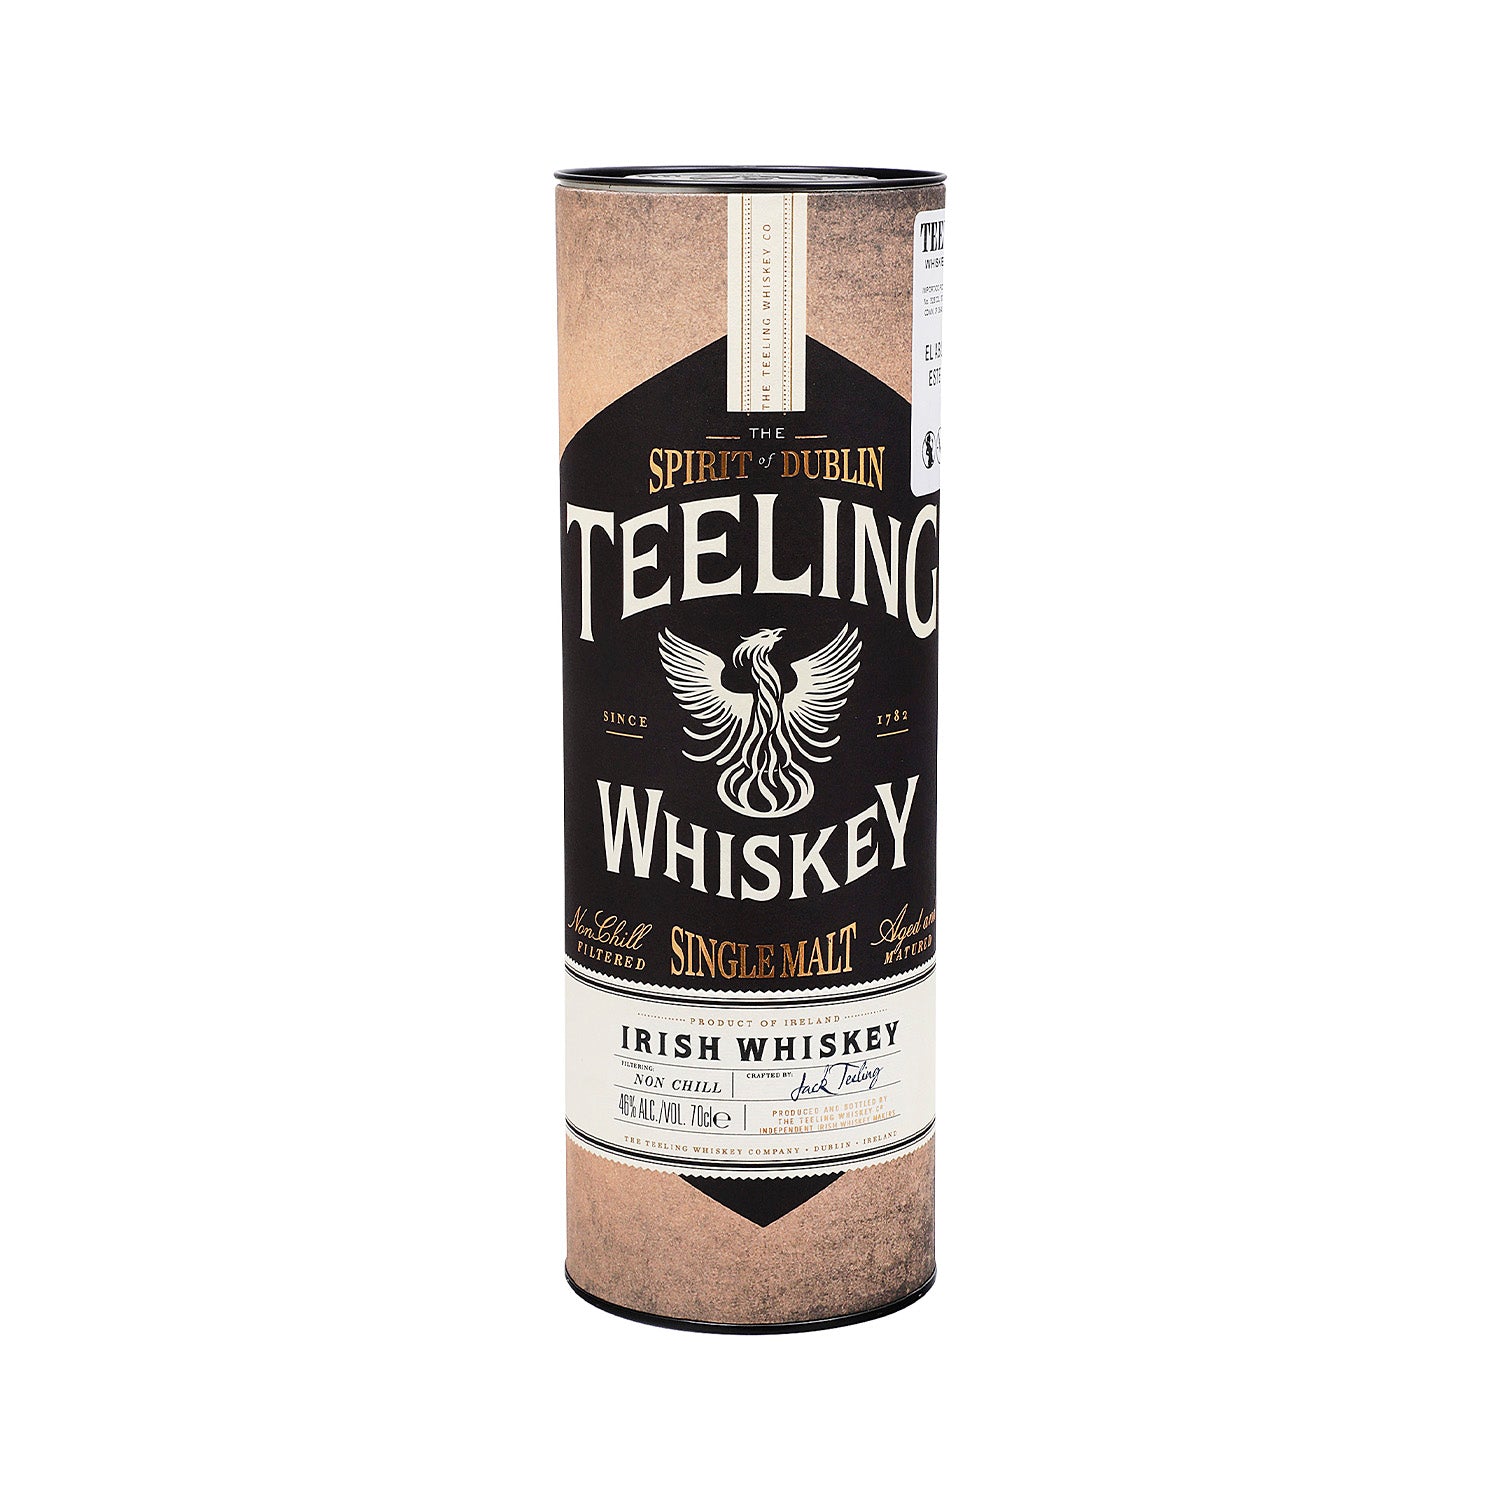 Whisky - Teeling Single Malt - 700 ml